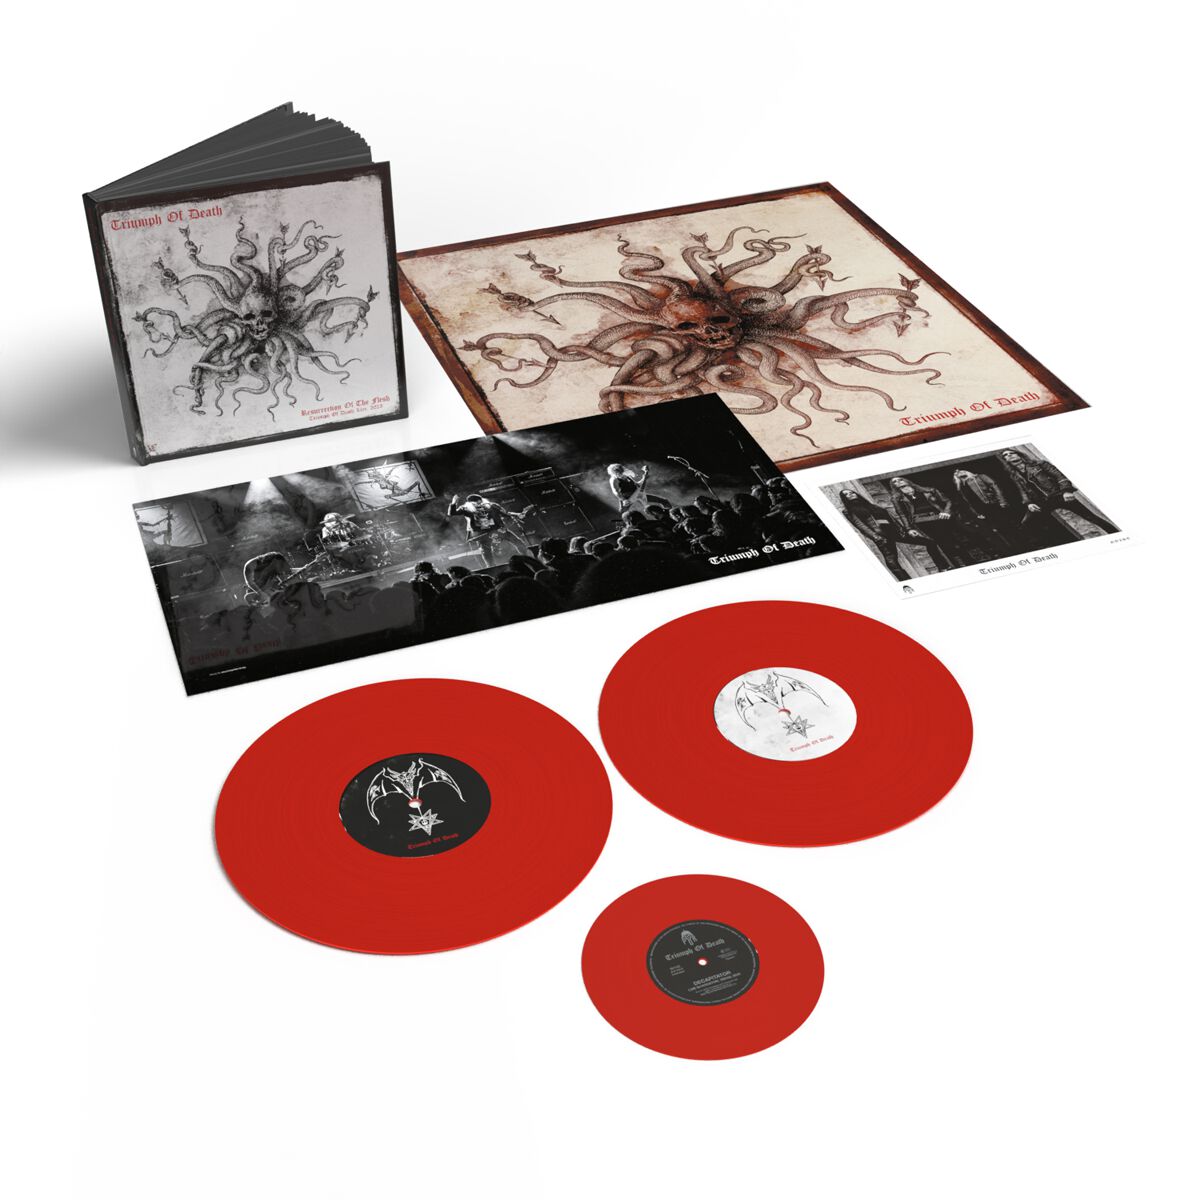 Resurrection of the flesh von Triumph Of Death - 2-LP (Box, Coloured, Deluxe Edition, Limited Edition)